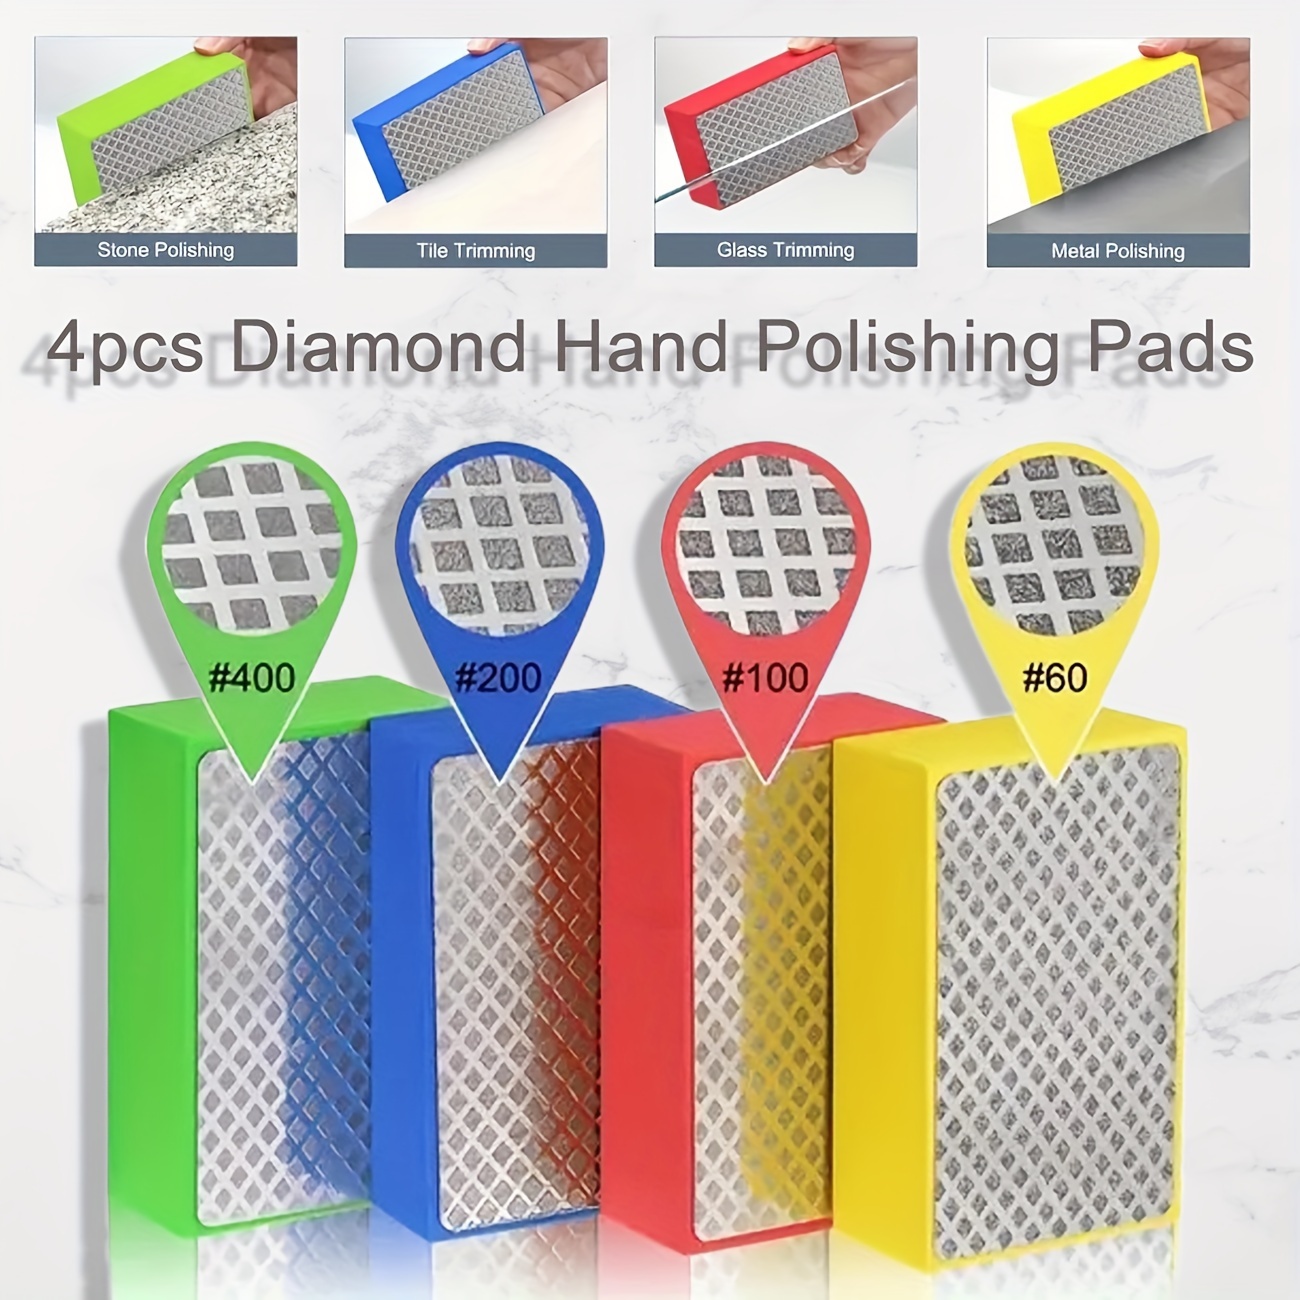 

4pcs Diamond Hand Polishing Pads, Glass Grinding Pads For Sanding Concrete Ceramic Tile Glass Stone Granite Marble Metal (60#, 100#, 200#, 400#) Wet Dry